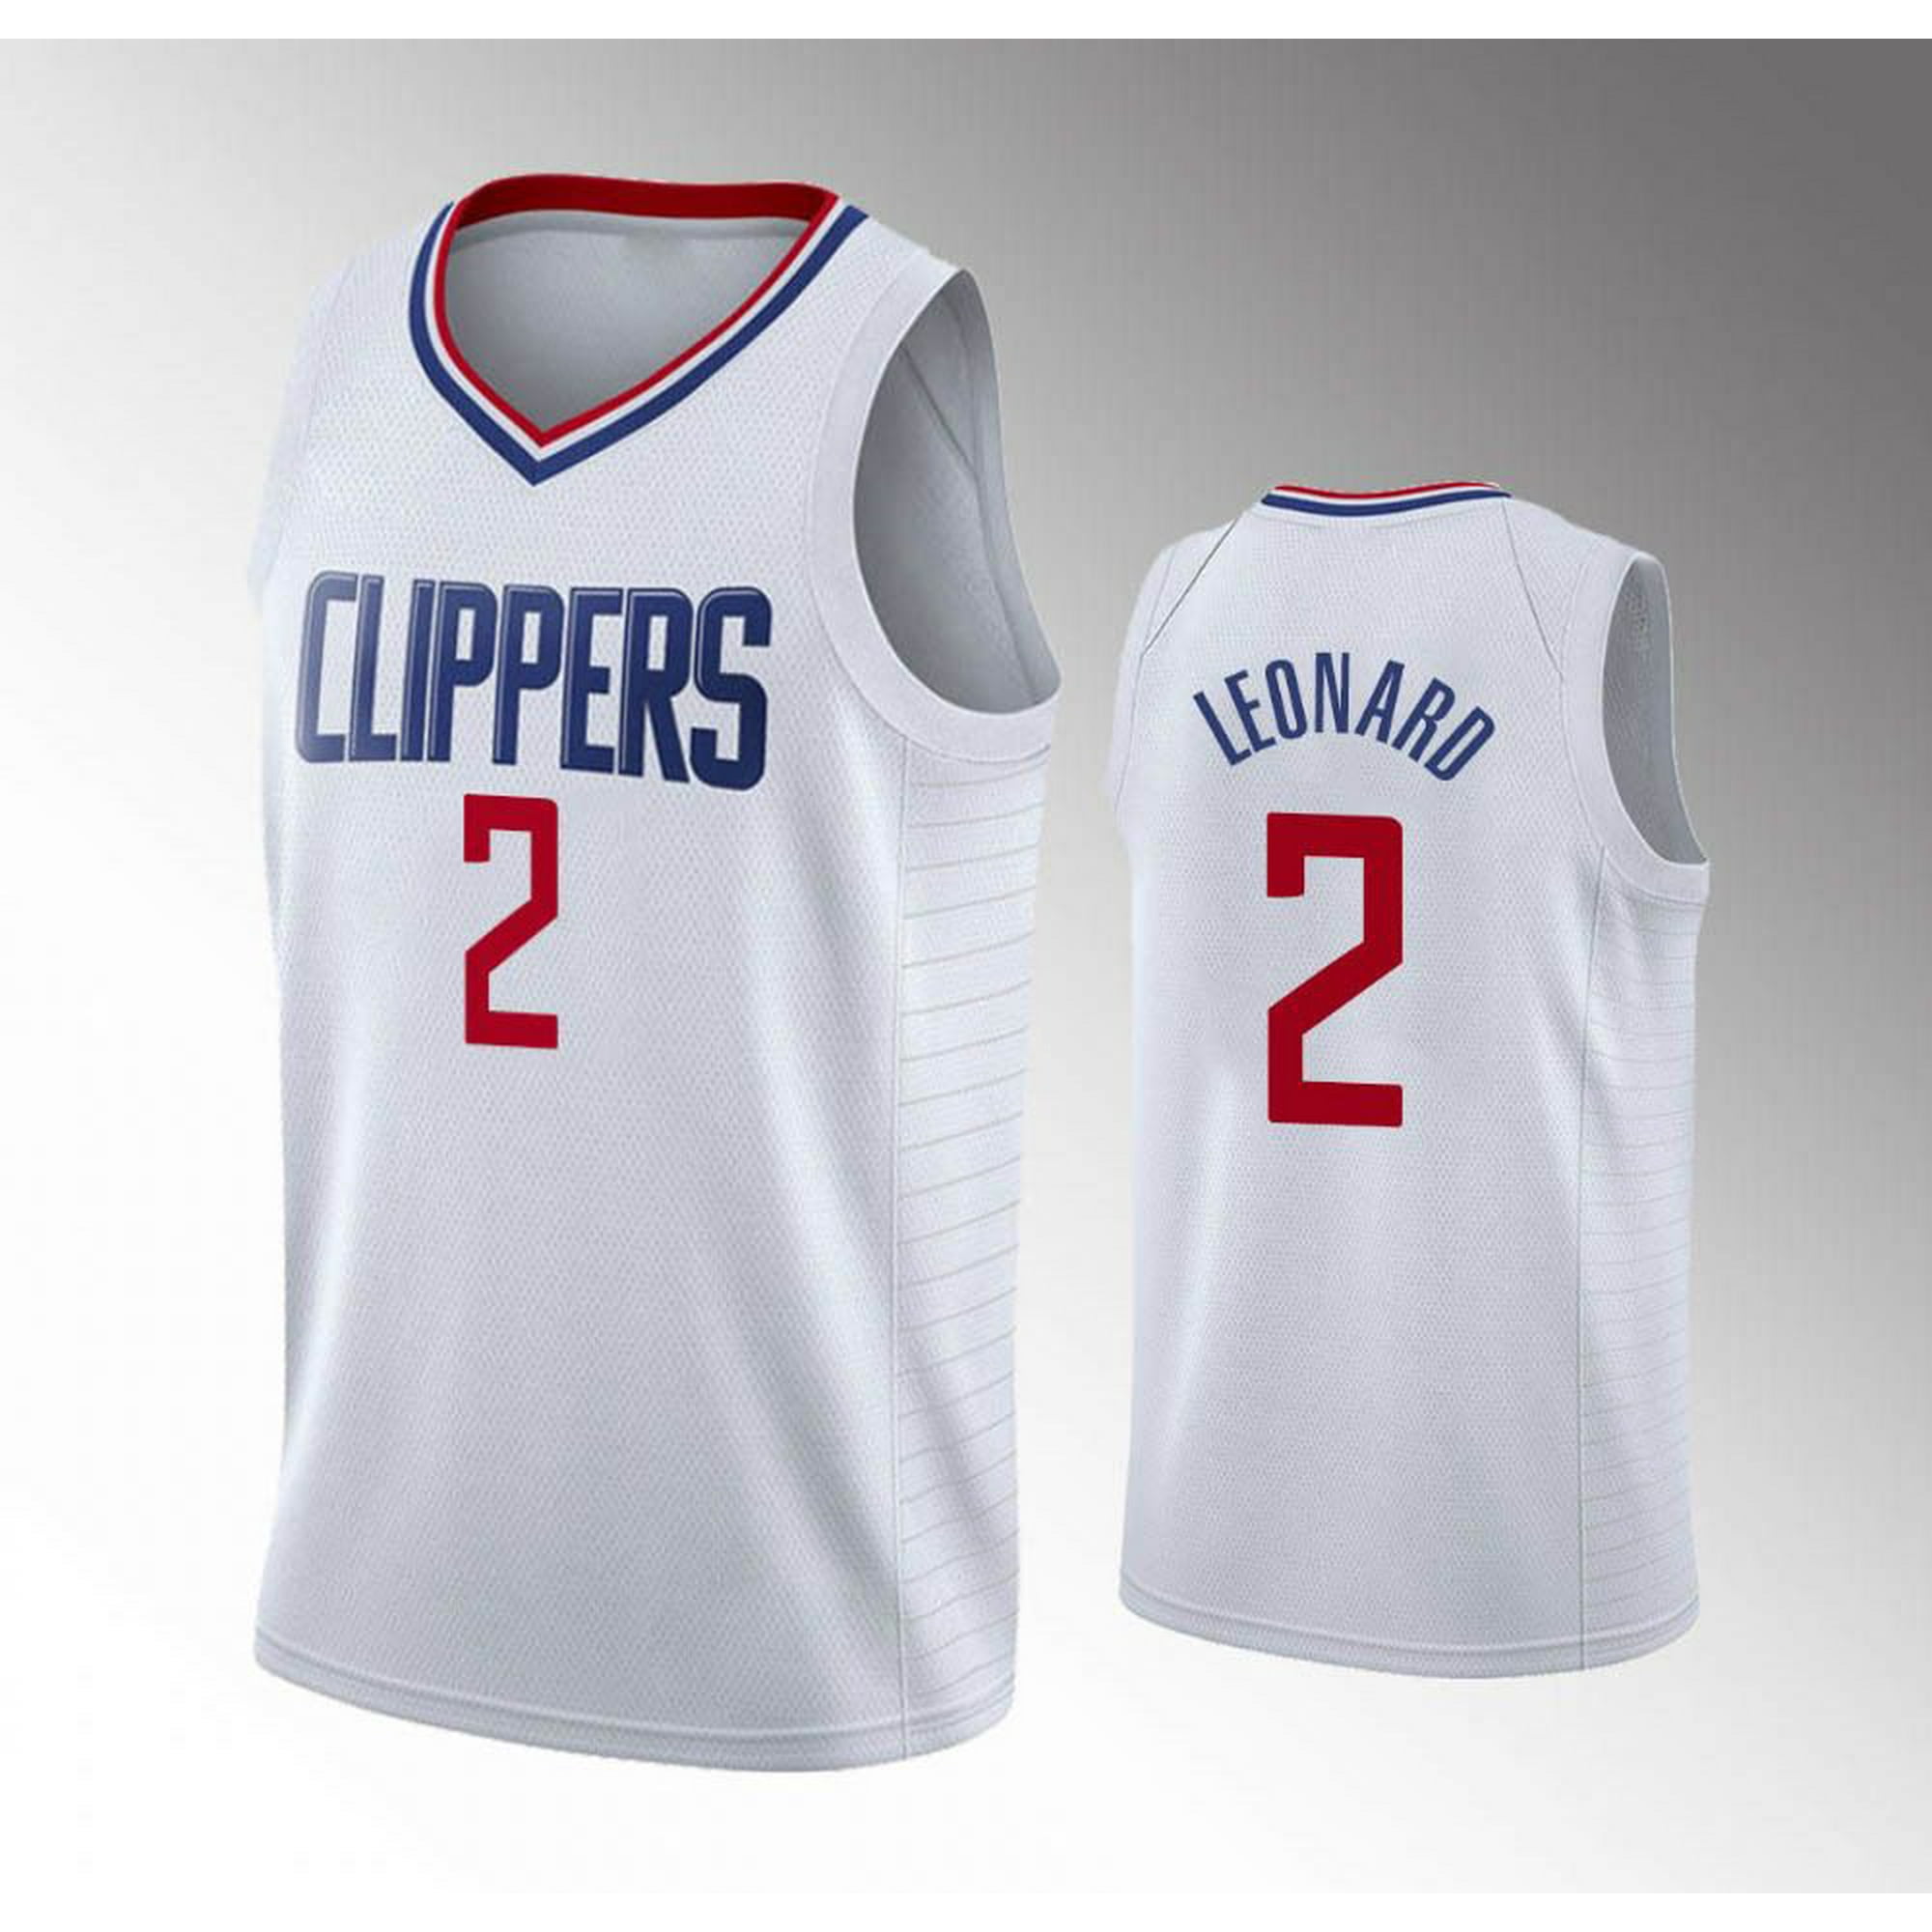 LA Clippers Custom Jerseys, Clippers Jersey, LA Clippers Uniforms